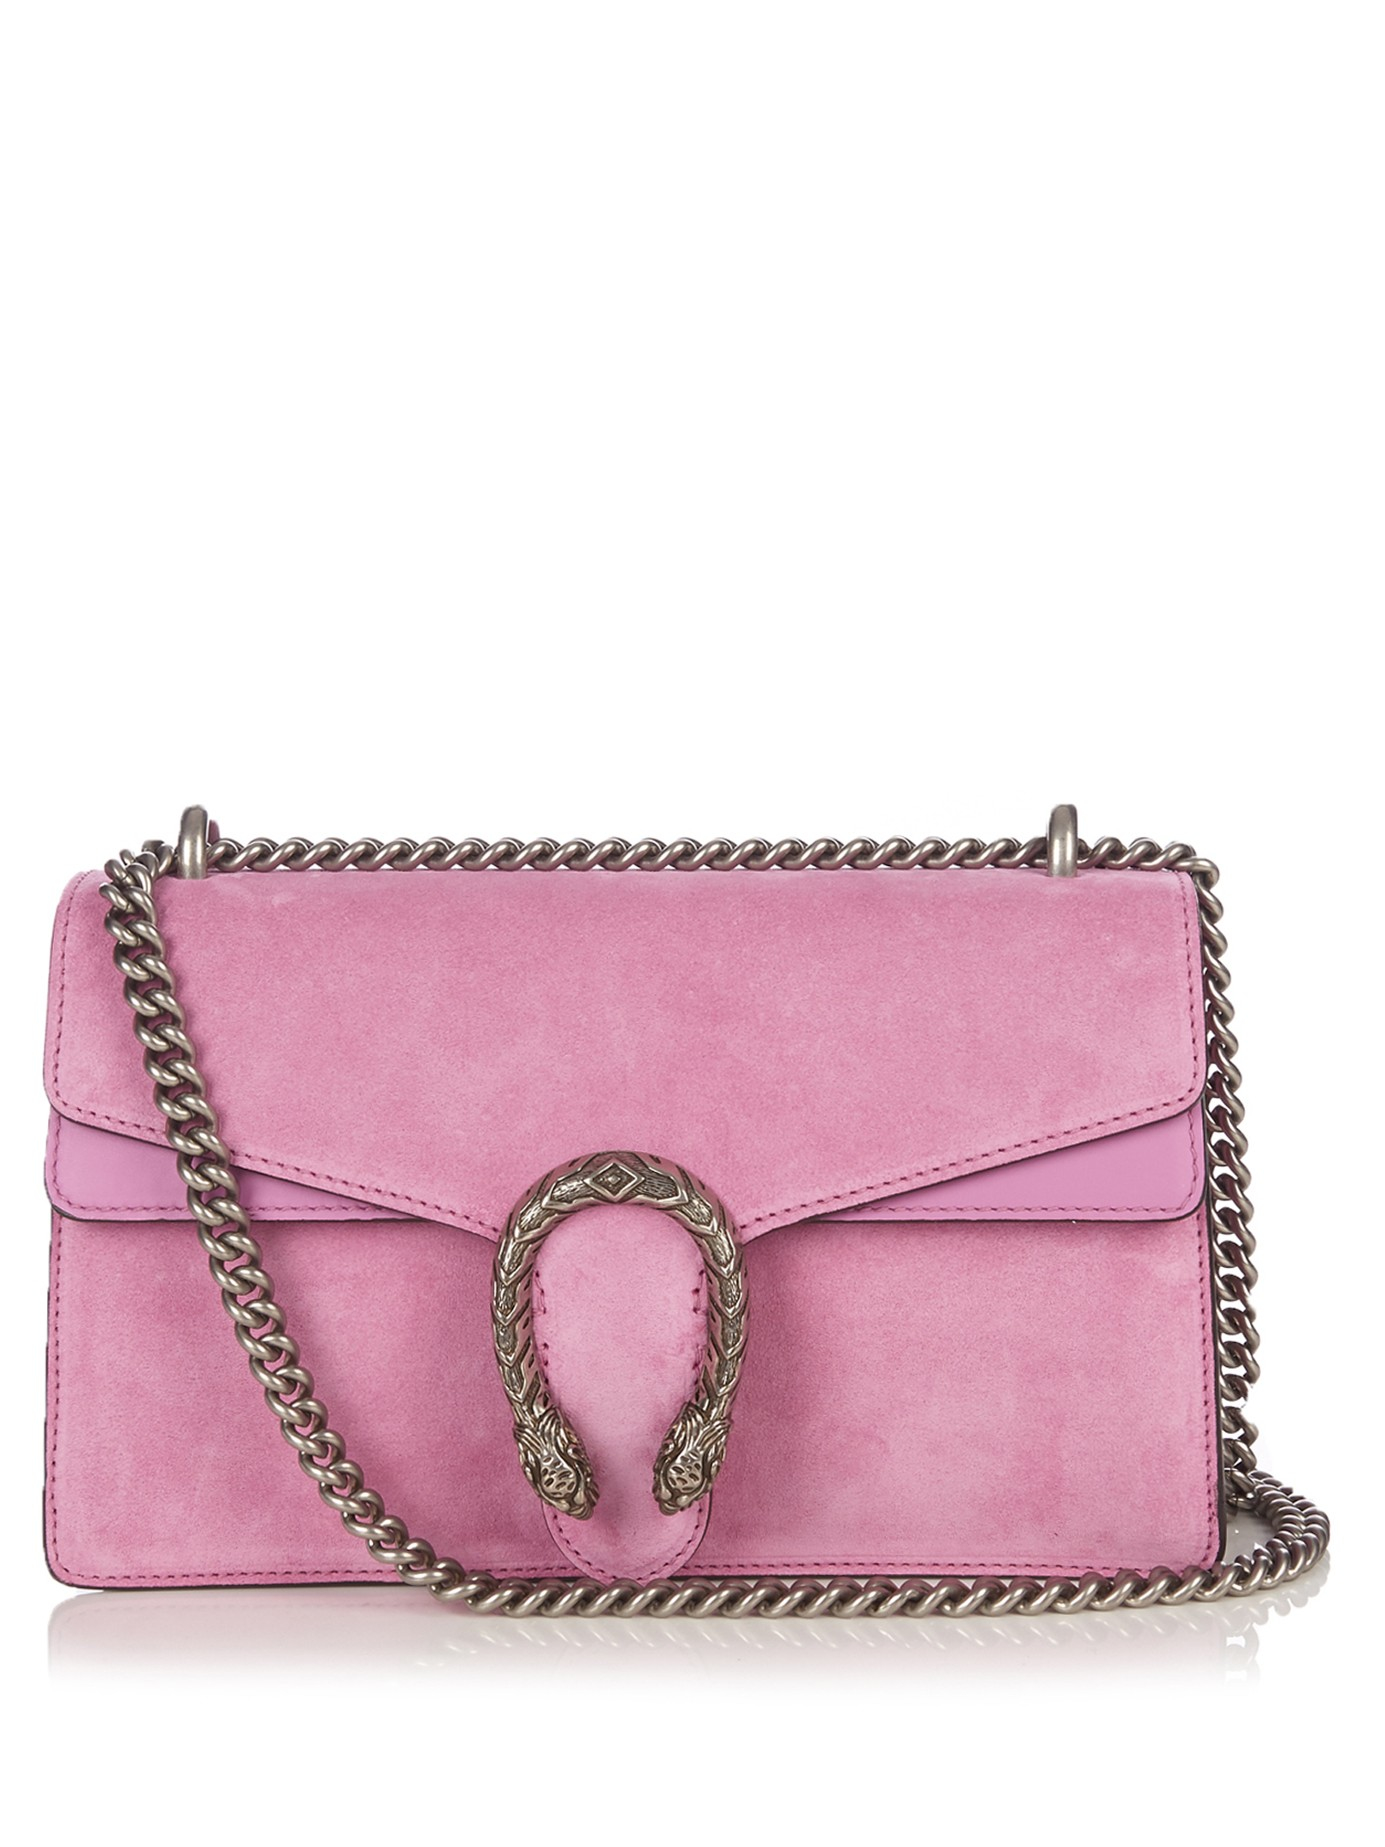 Gucci Dionysus Suede Shoulder Bag in Pink | Lyst